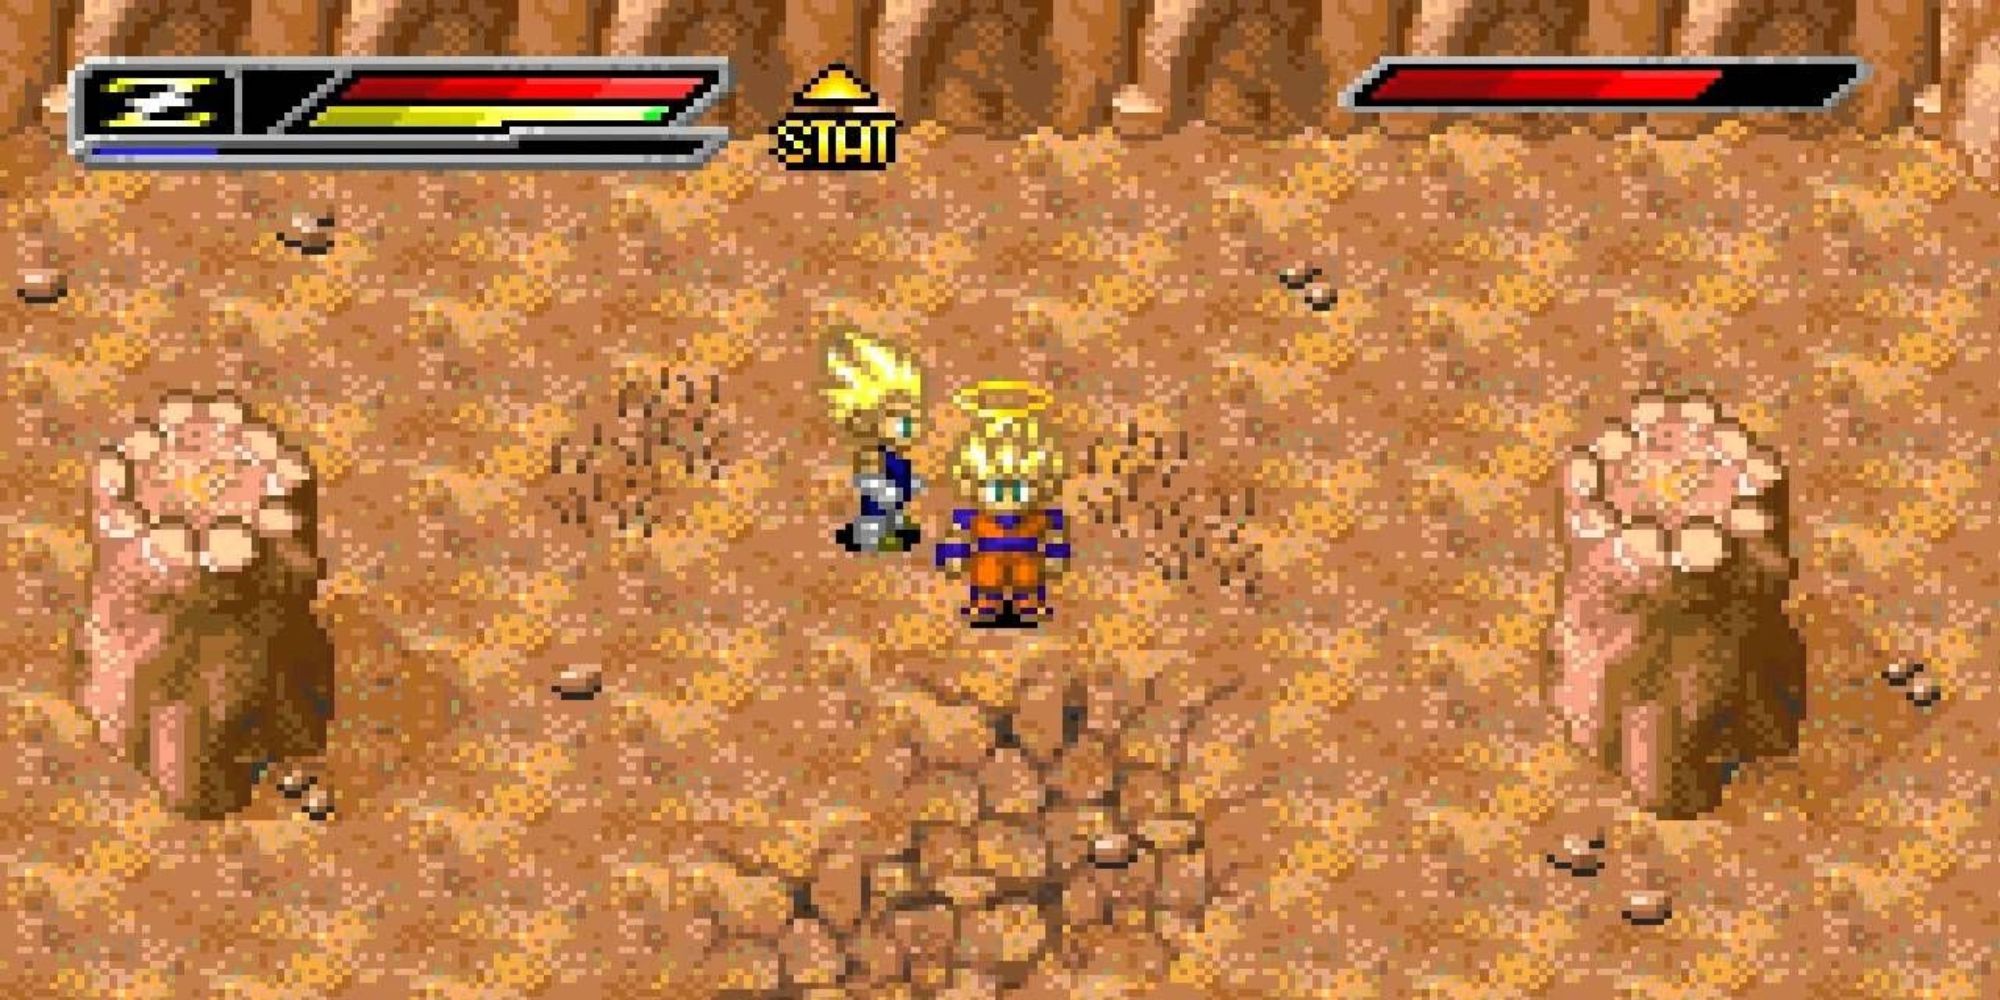 Goku (Angel) and Vegeta standing in a desolate wasteland.